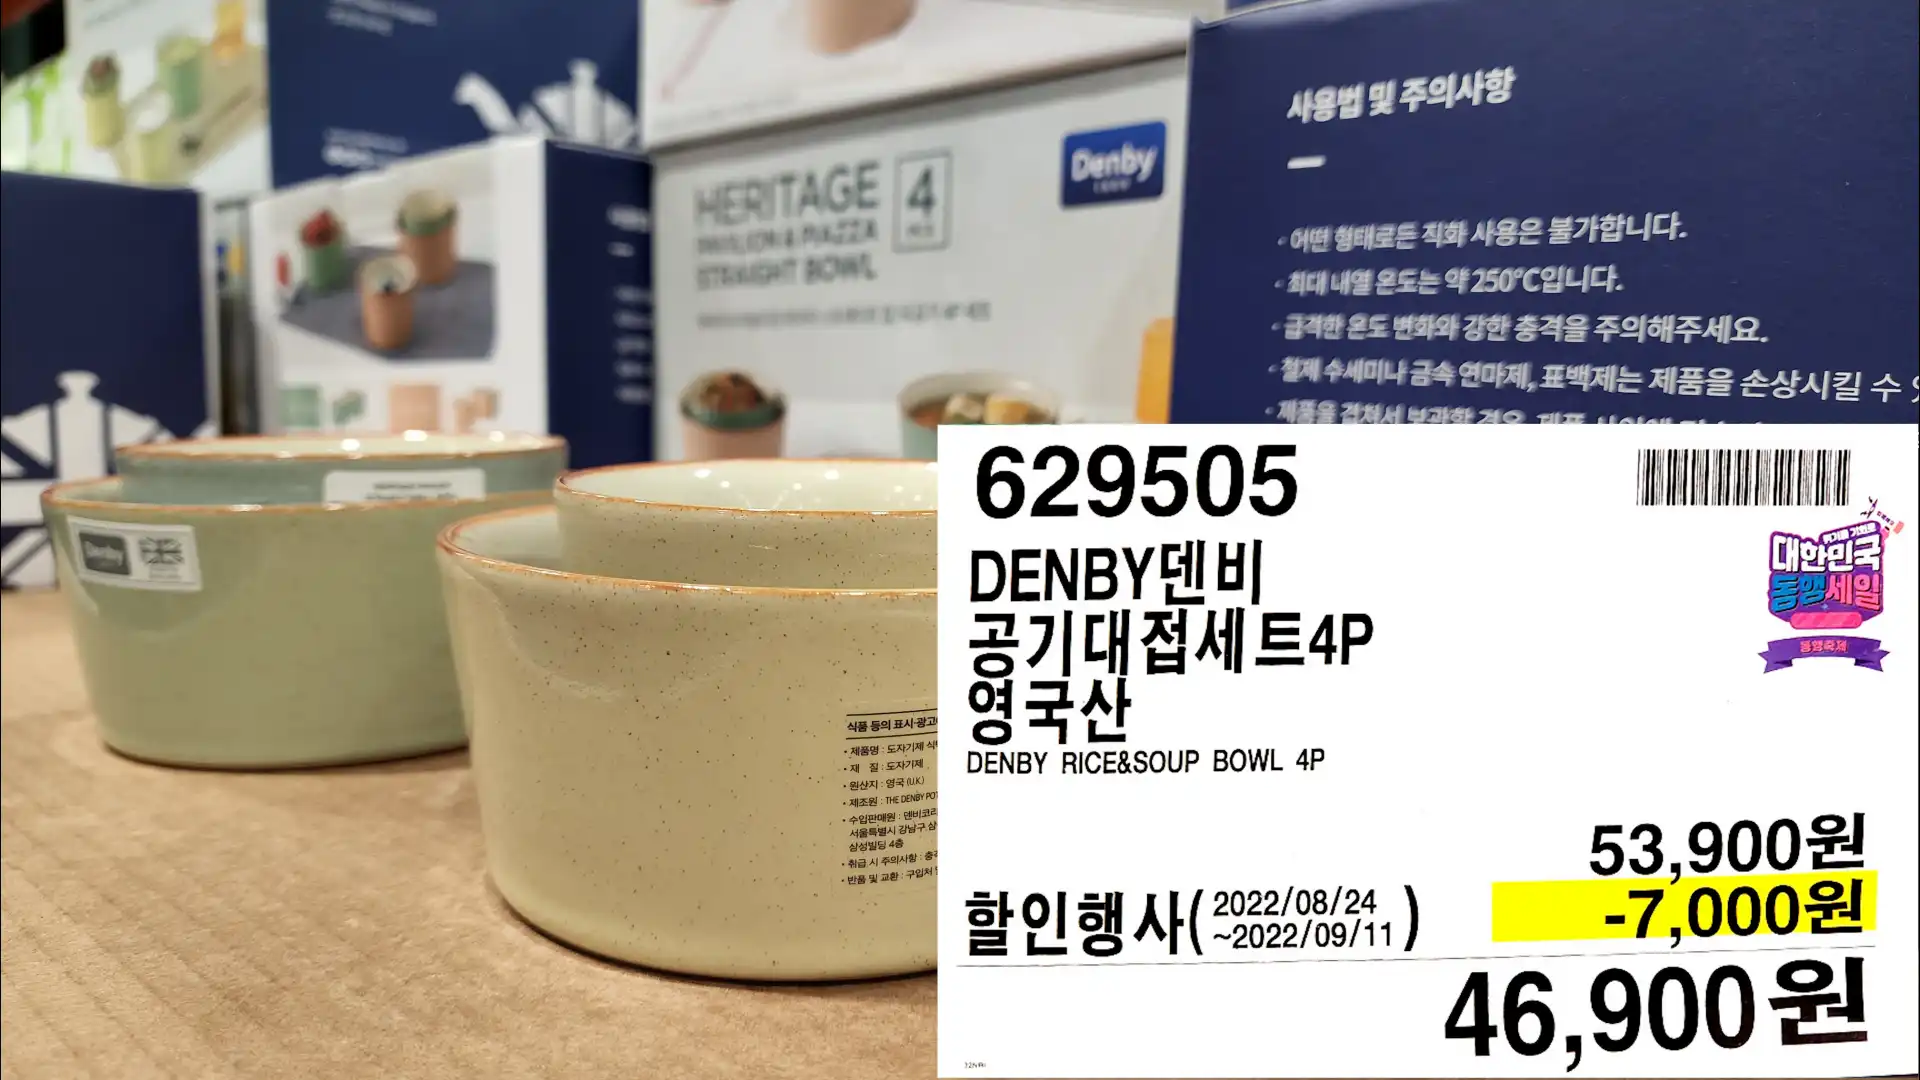 DENBY덴비
공기대접세트4P
영국산
DENBY RICE&SOUP BOWL 4P
46,900원